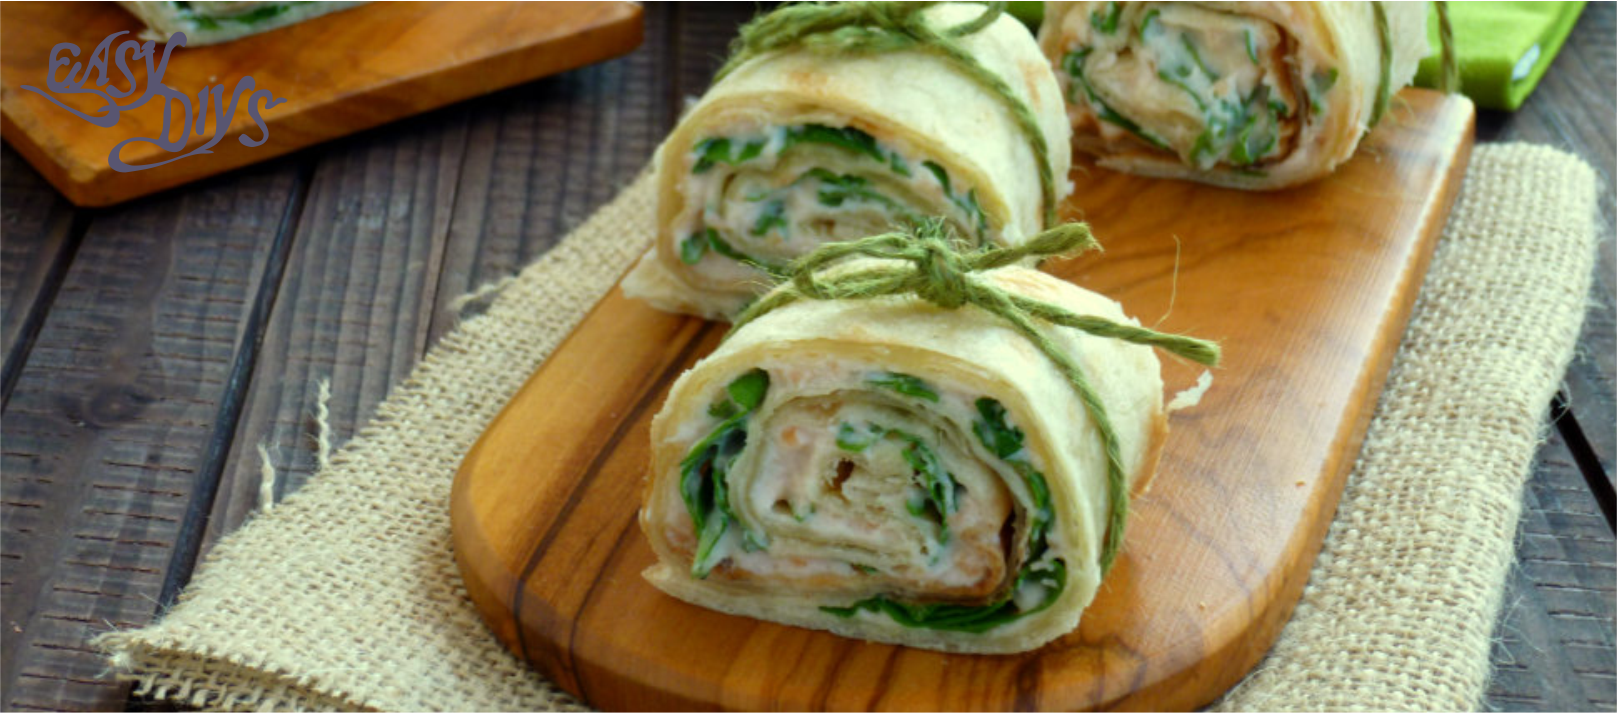 Piadina rolls with salmon and arugula